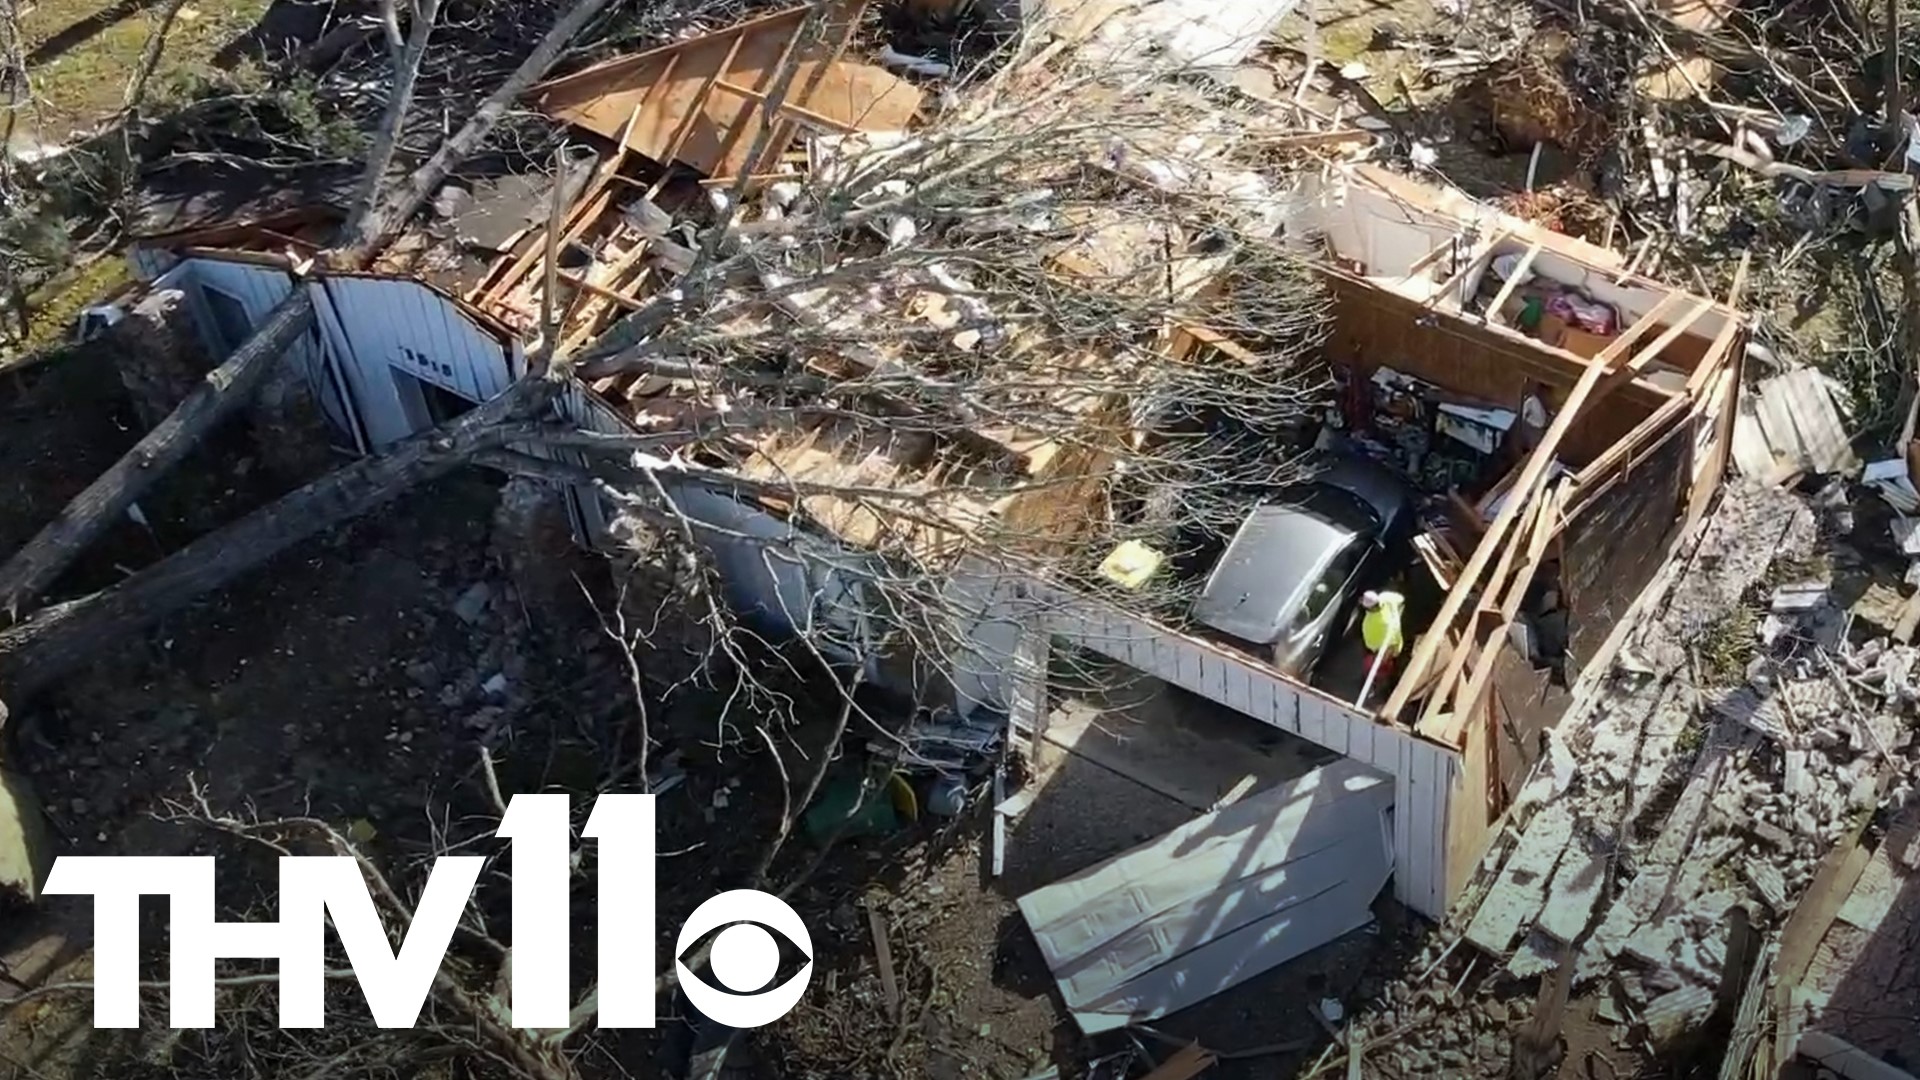 Drone footage from Matt Standridge shows the extensive damage across Little Rock in several different neighborhoods.